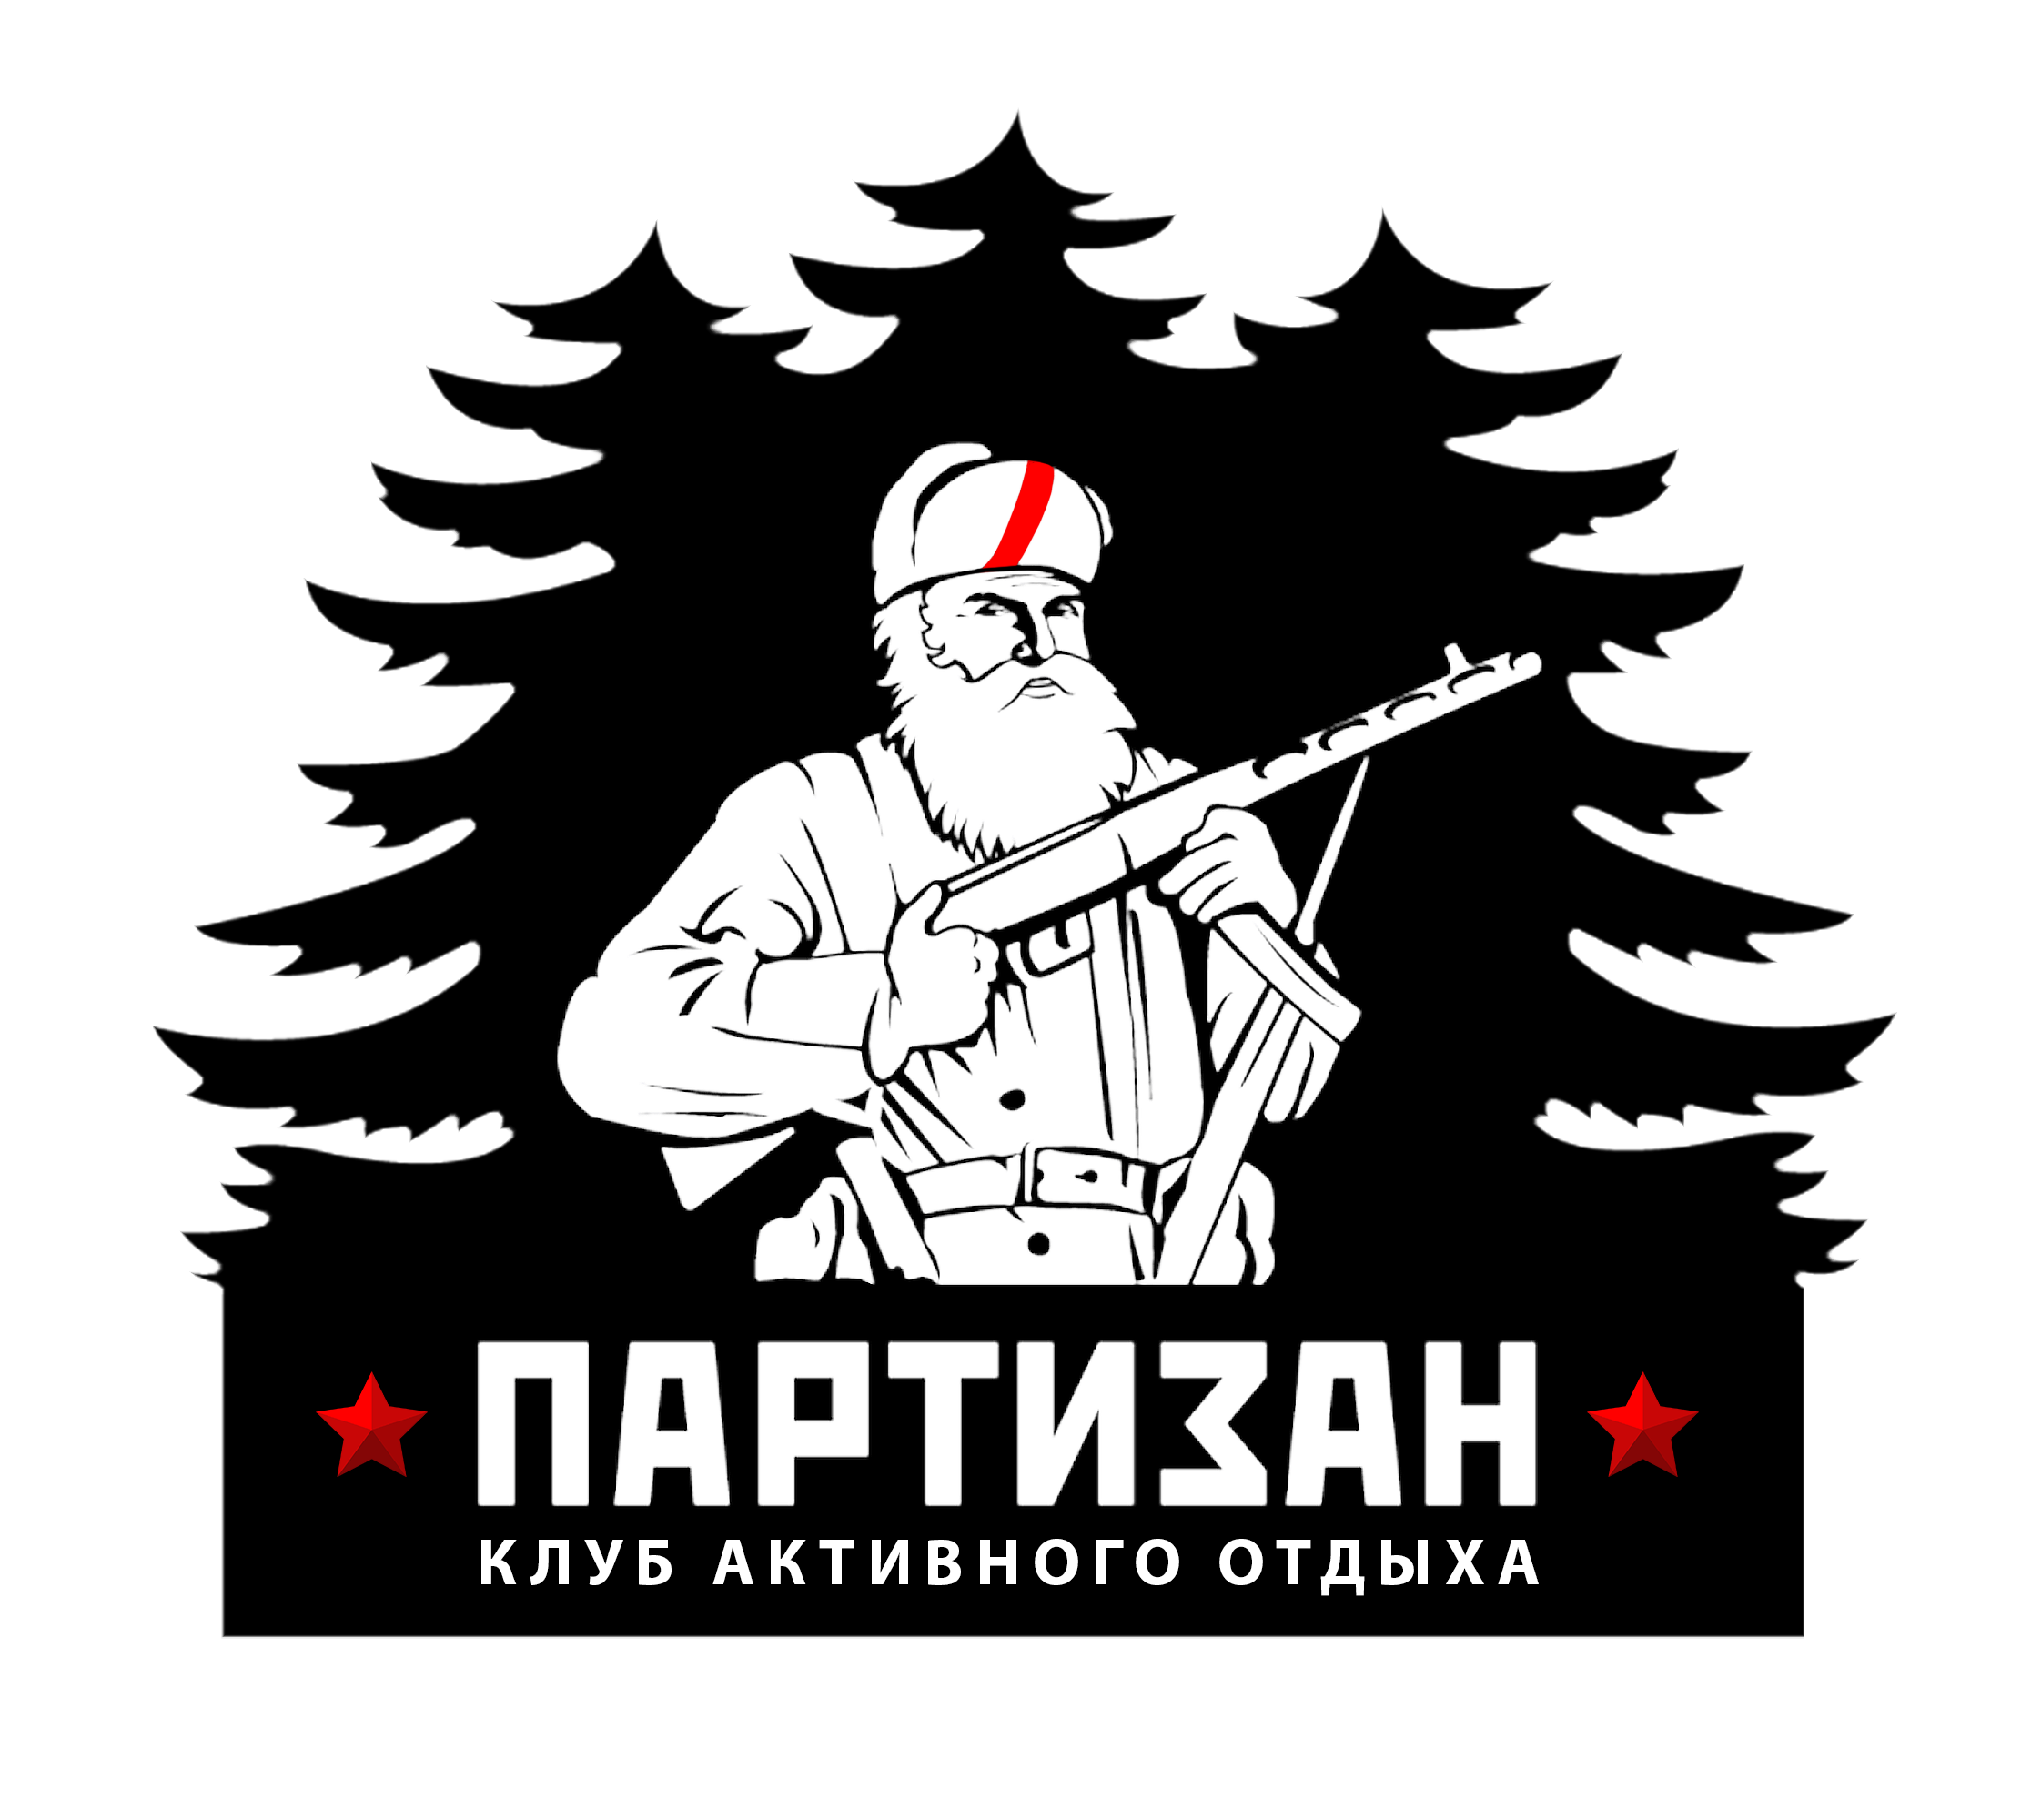 Логотип Клуб активного отдыха "Партизан"